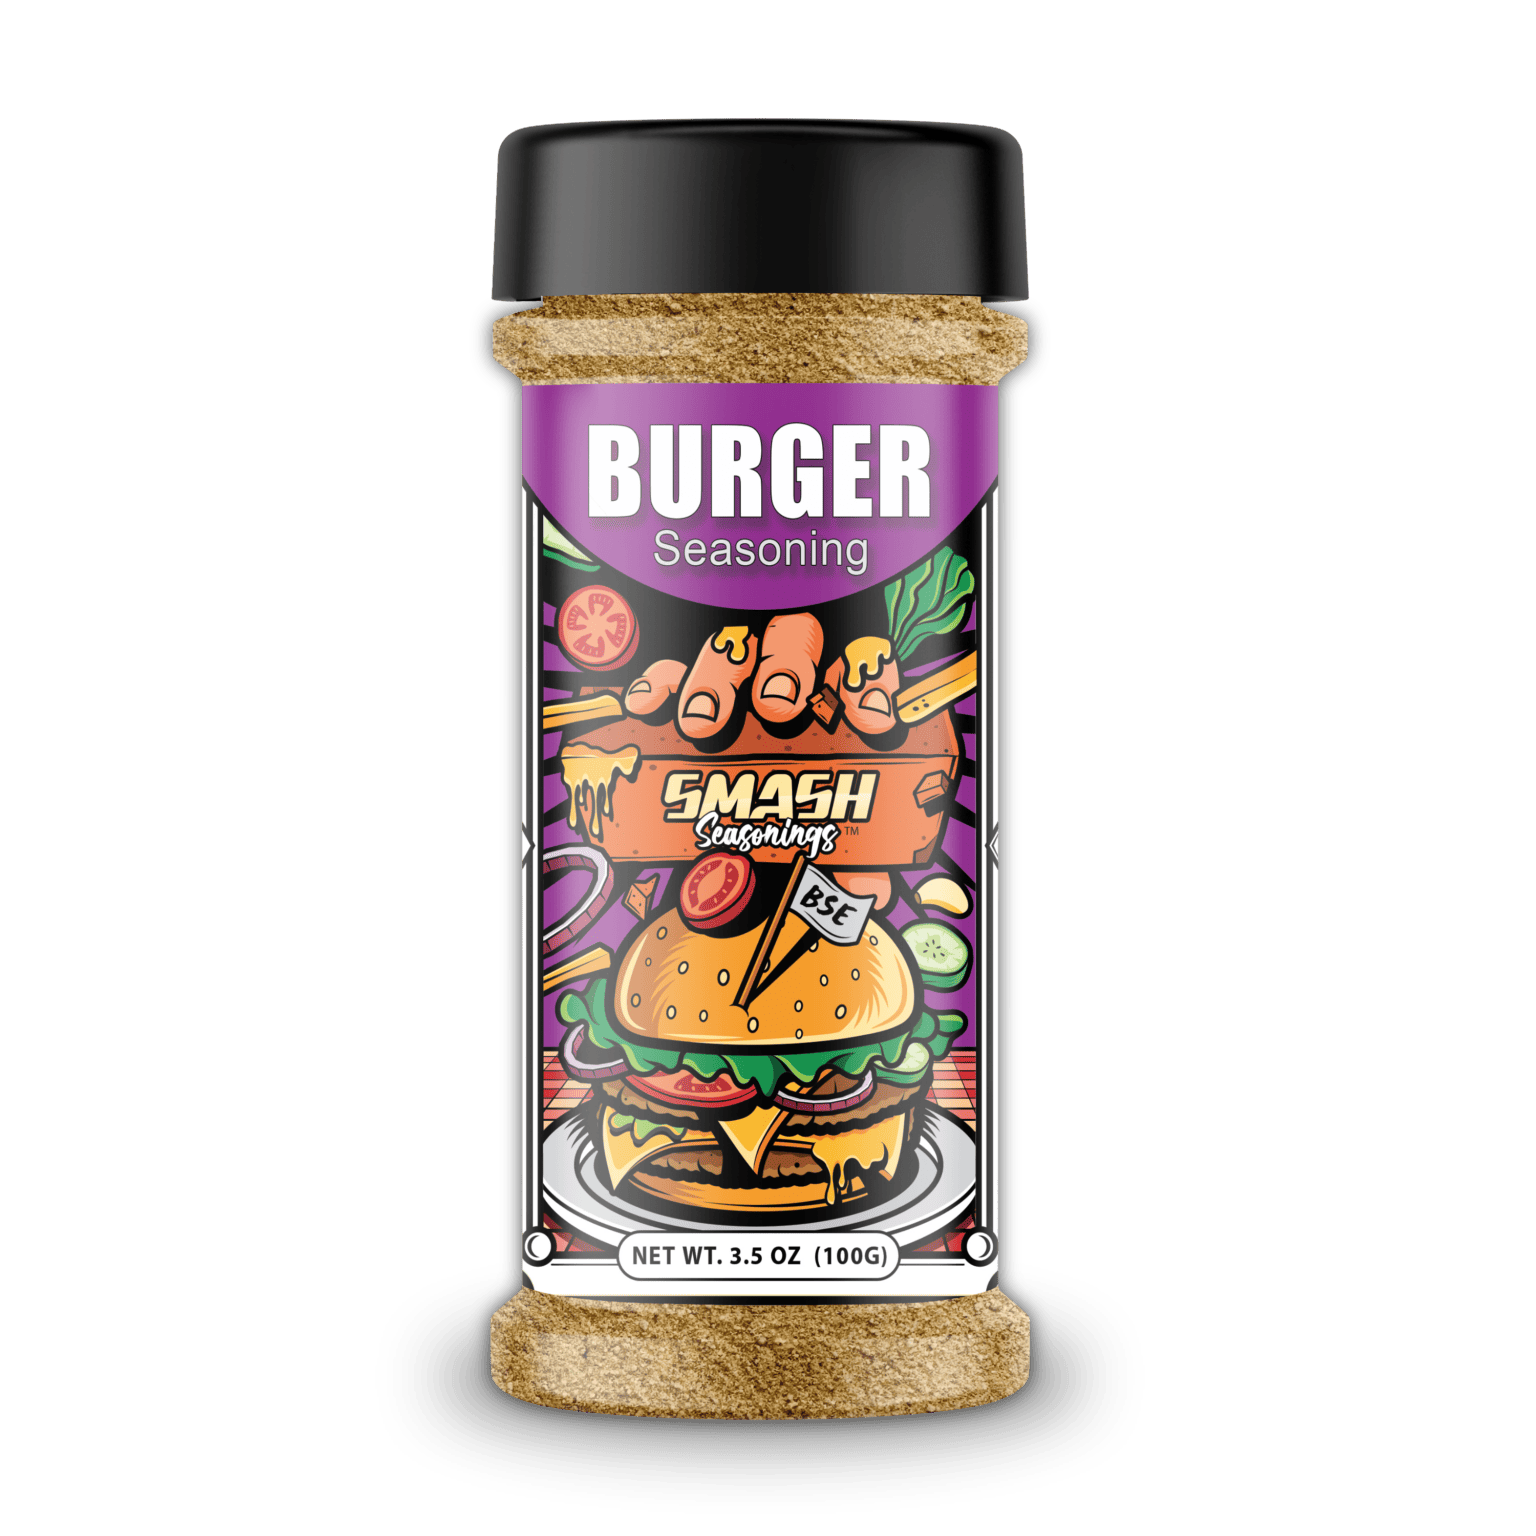 Burger Seasoning – Smash Seasonings